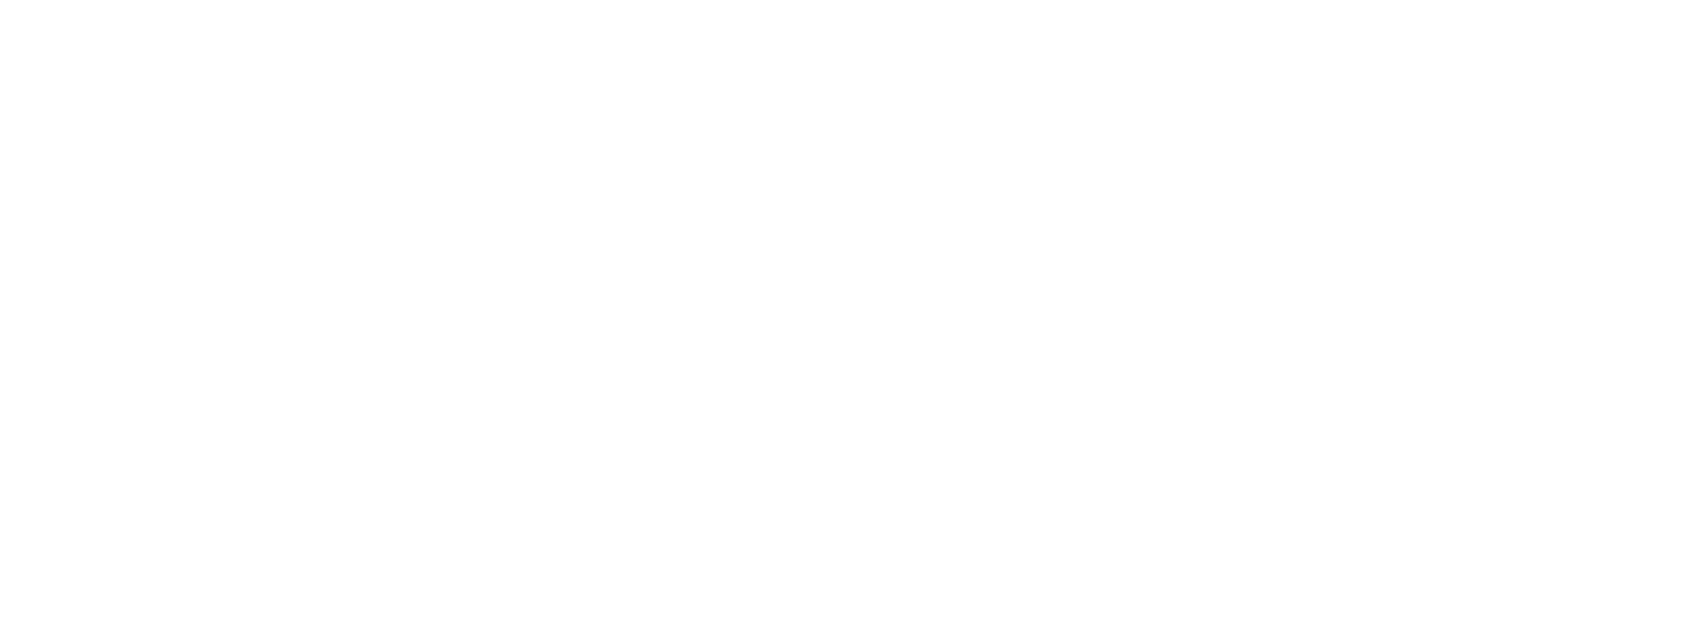 Founding Partner - Verizon